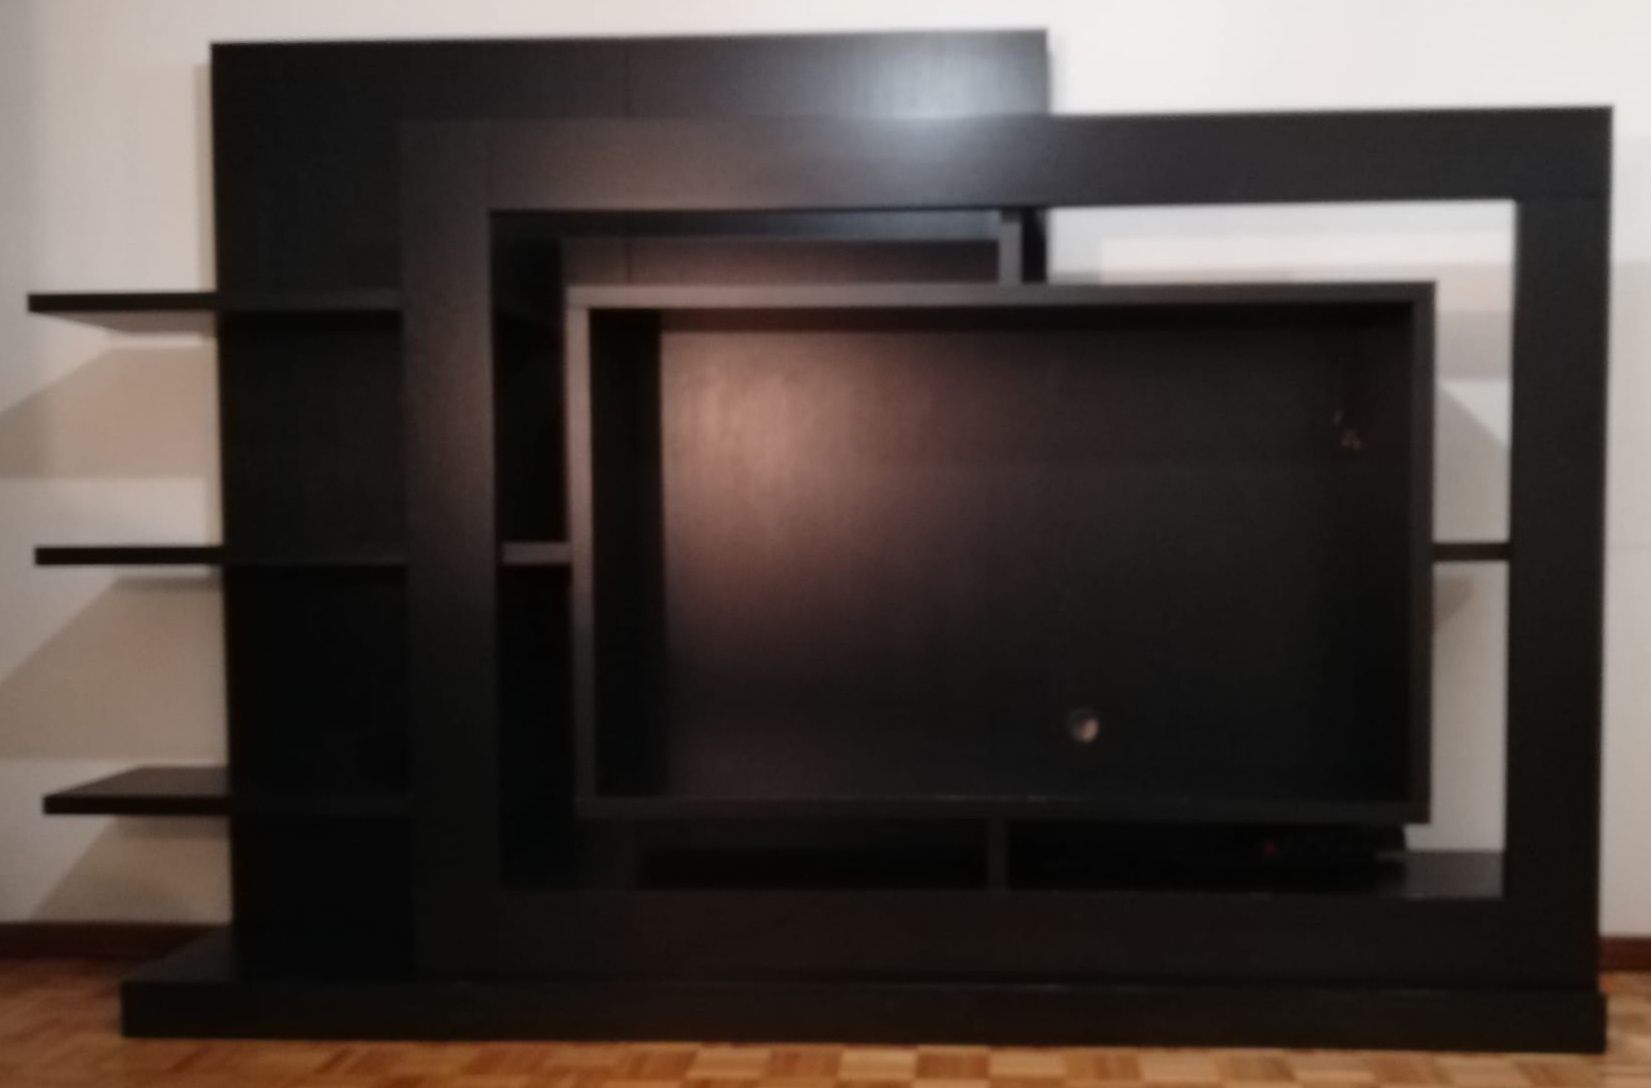 Móvel TV madeira